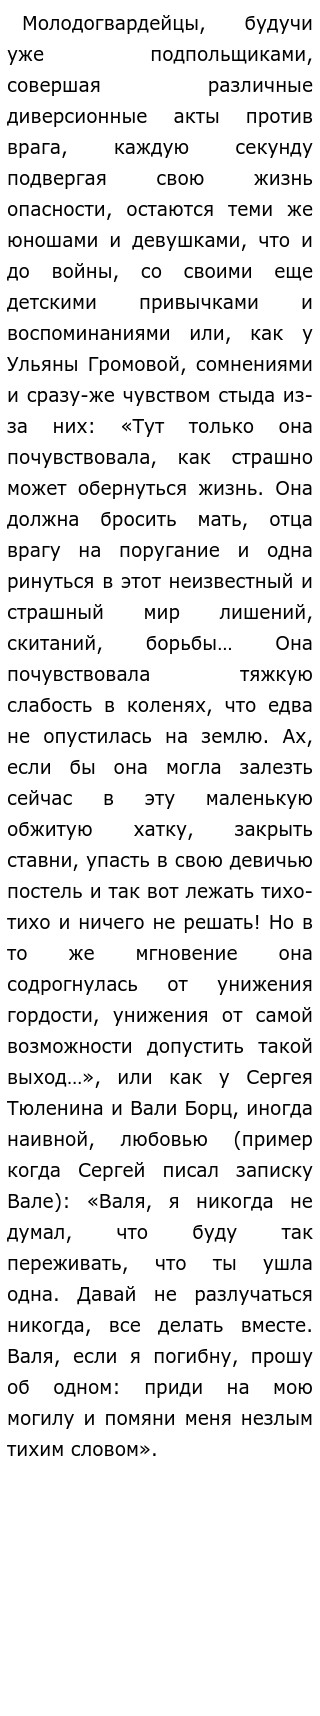 Сочинение по теме Молодая гвардия А. Фадеева